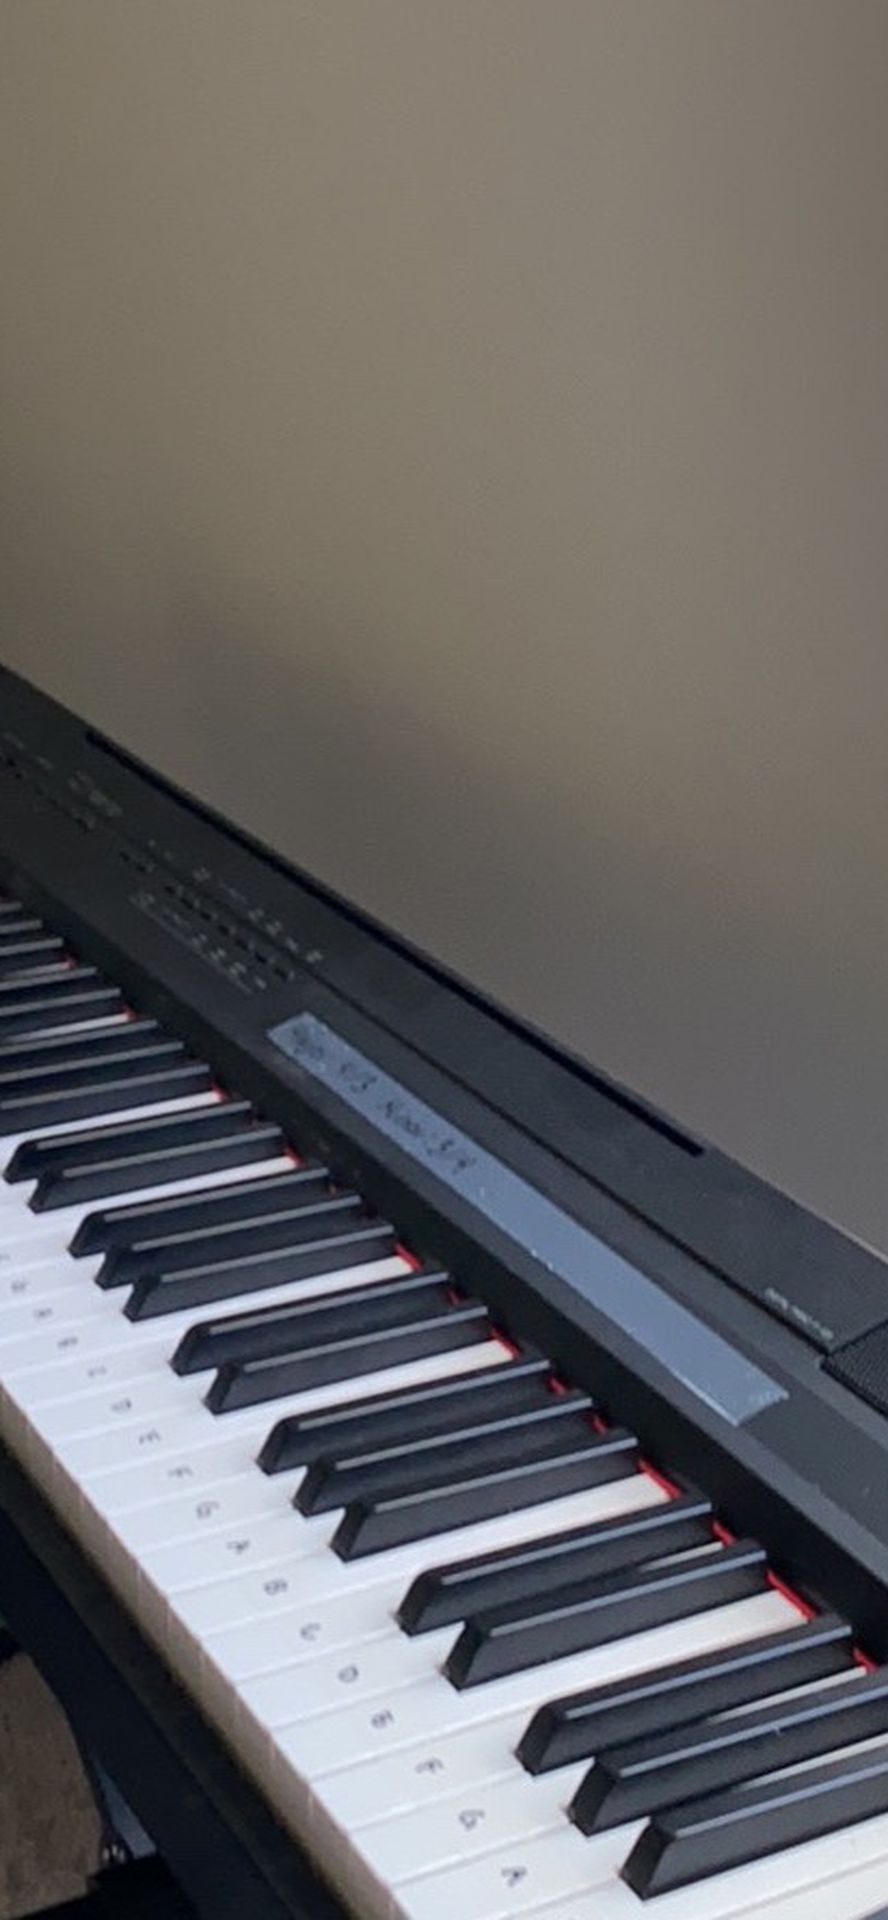 Yamaha P-95 88-key Digital Piano Keyboard